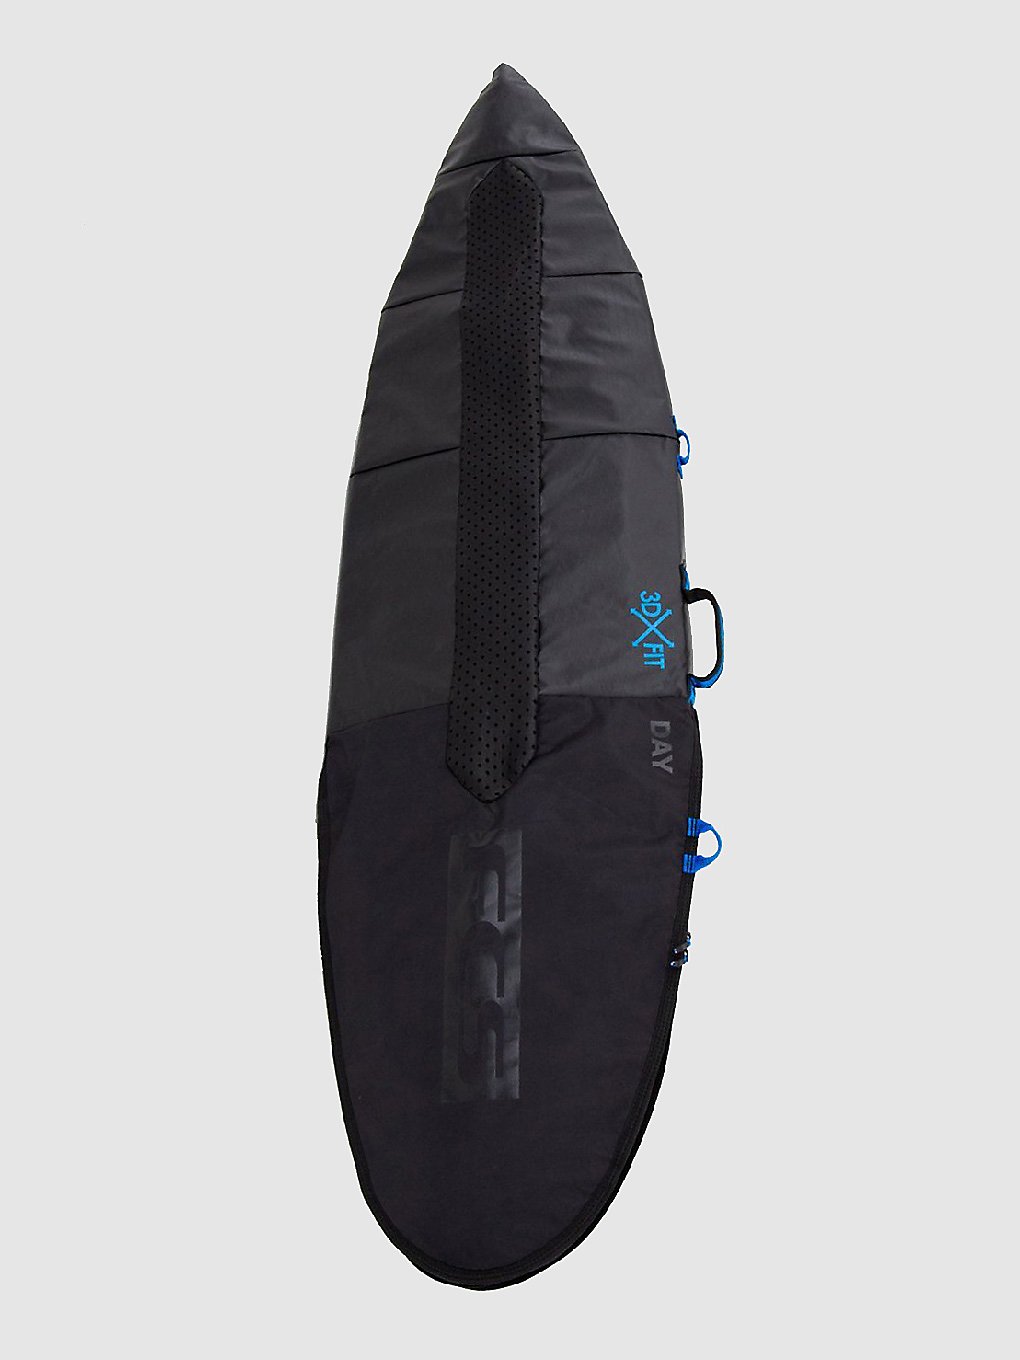 FCS Day All Purpose 5’6 Surfboard tas zwart